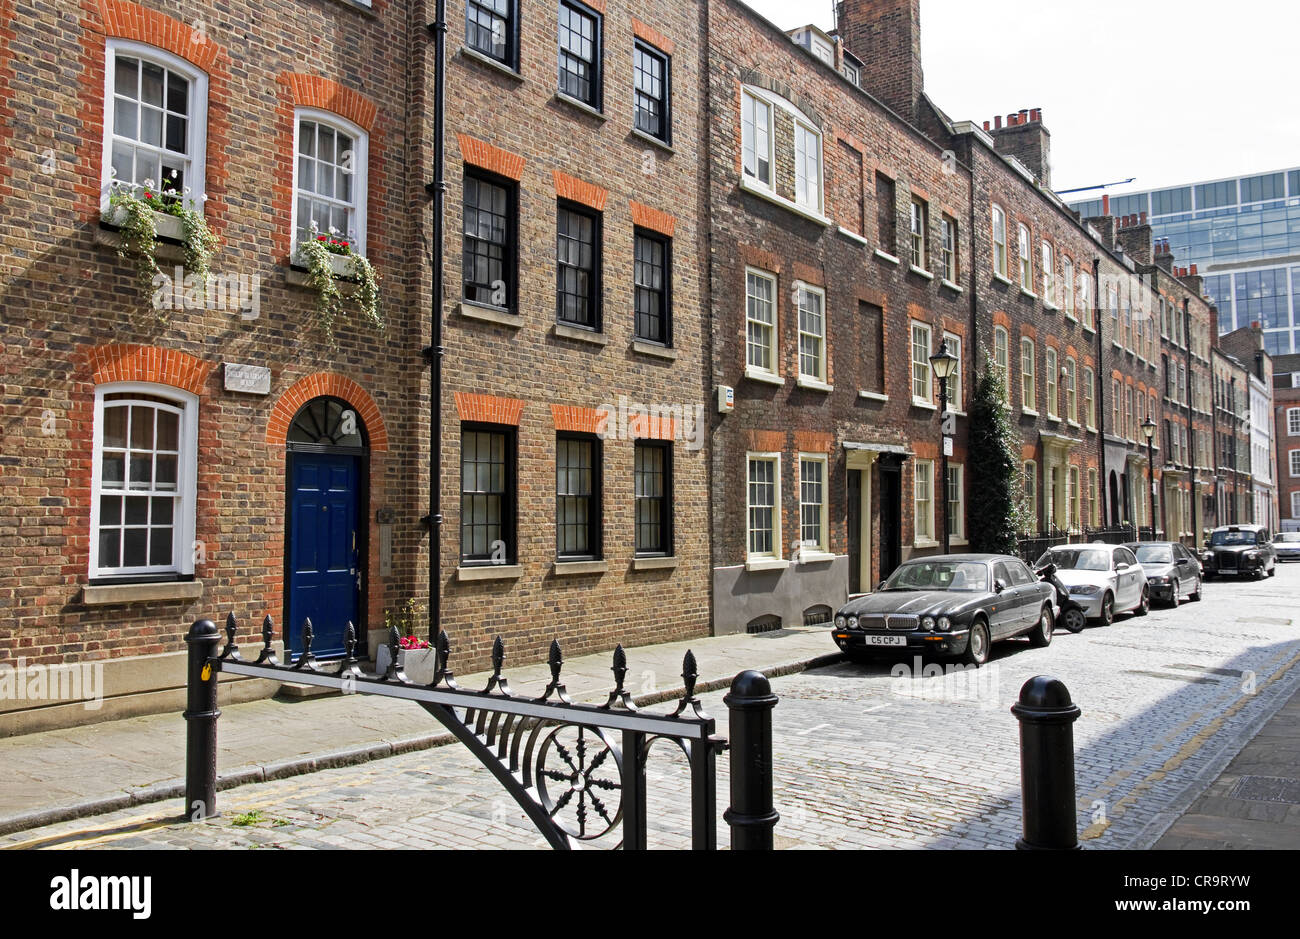 https://c8.alamy.com/comp/CR9RYW/terraced-houses-elder-street-spitalfields-east-end-london-england-CR9RYW.jpg